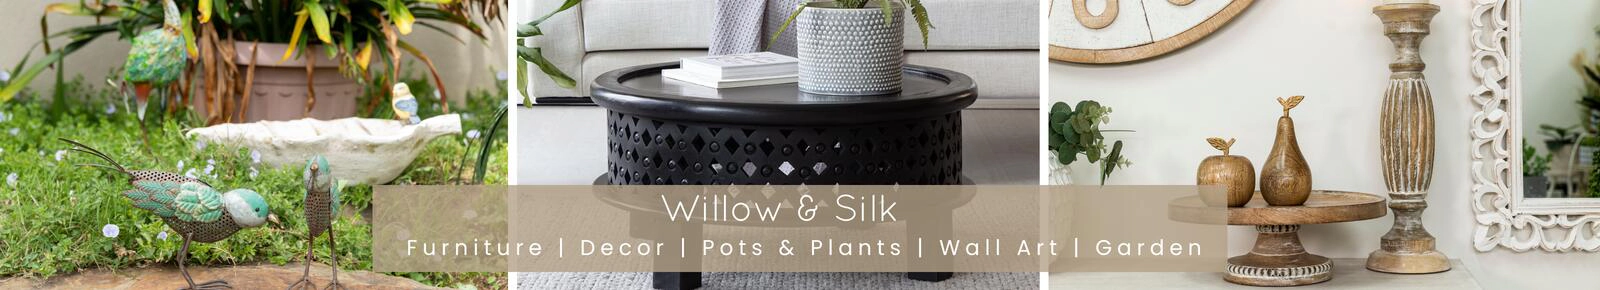 Willow & Silk